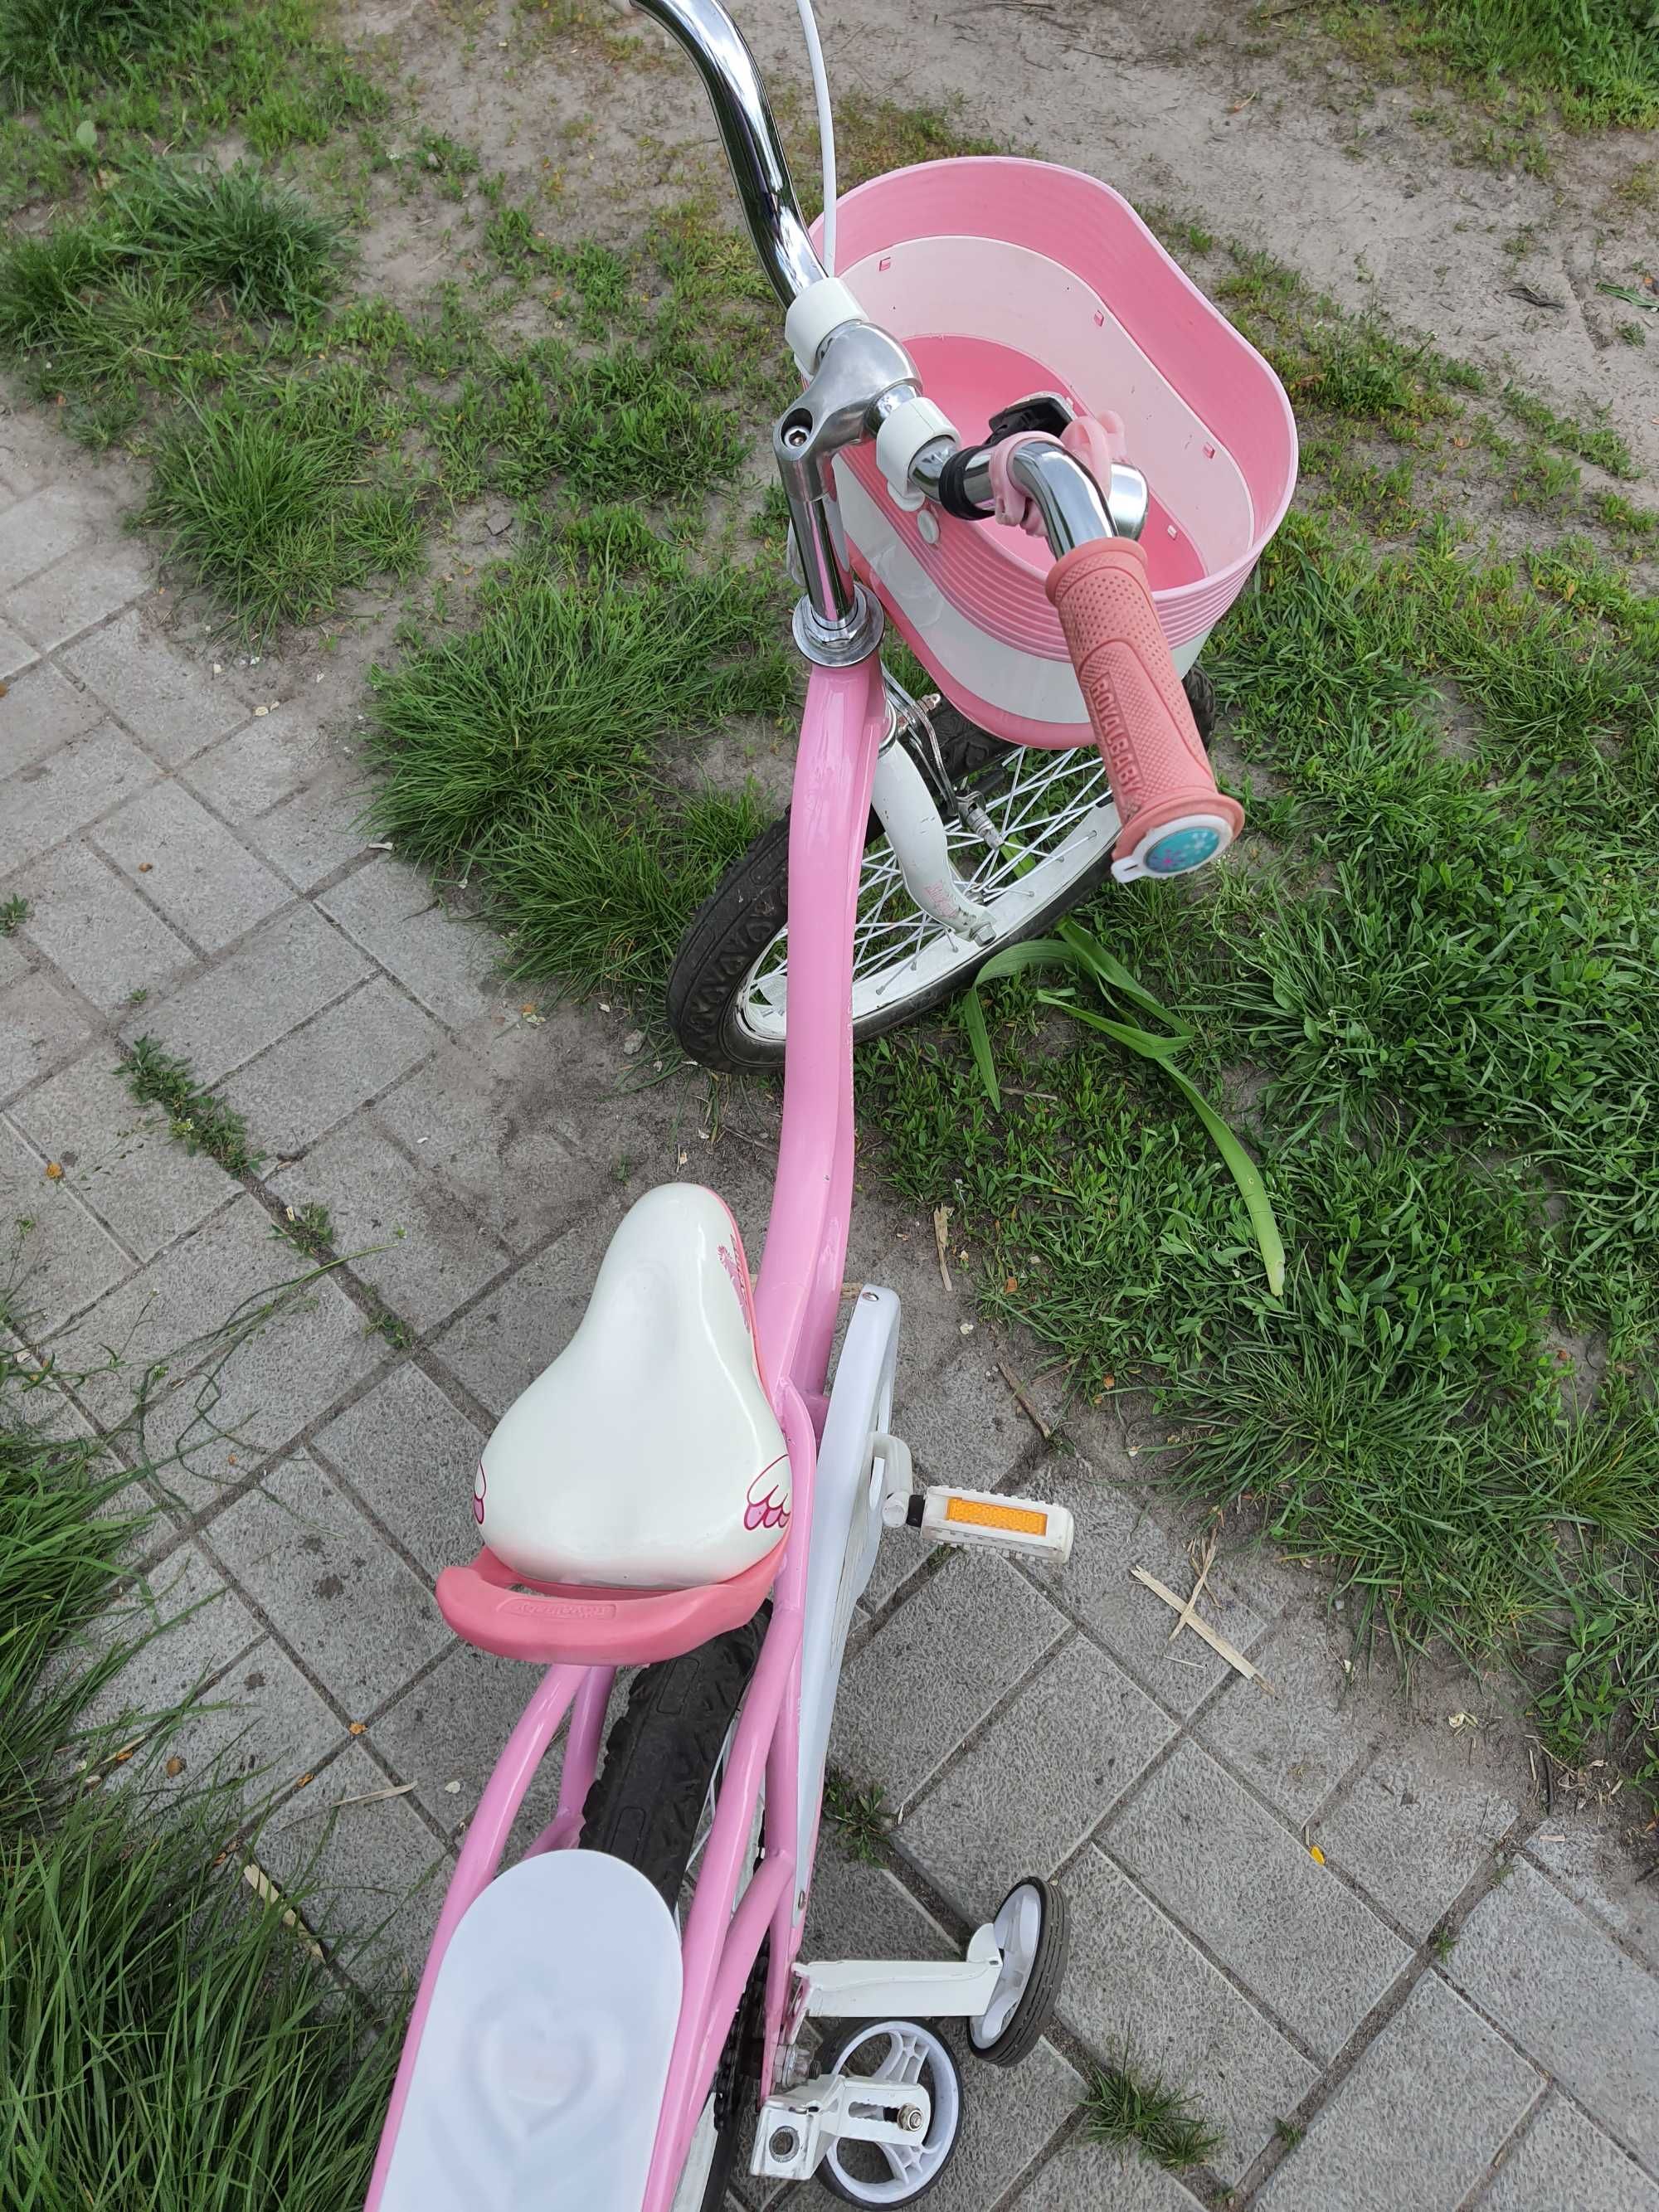 Дитячий велосипед  Ардис little swam royal baby диаметр колес 18